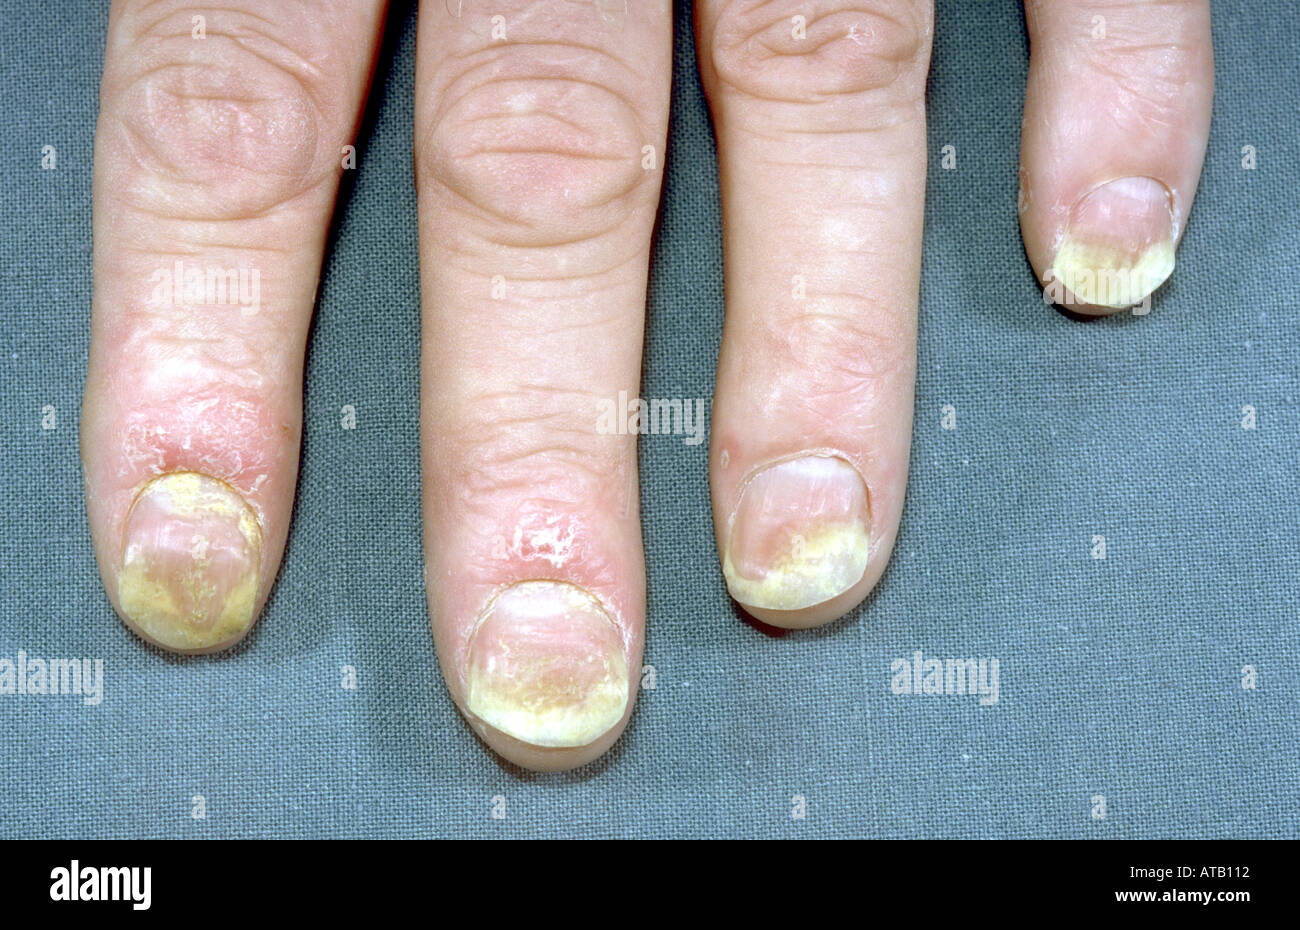 Toe Nail Psoriasis Image & Photo (Free Trial) | Bigstock